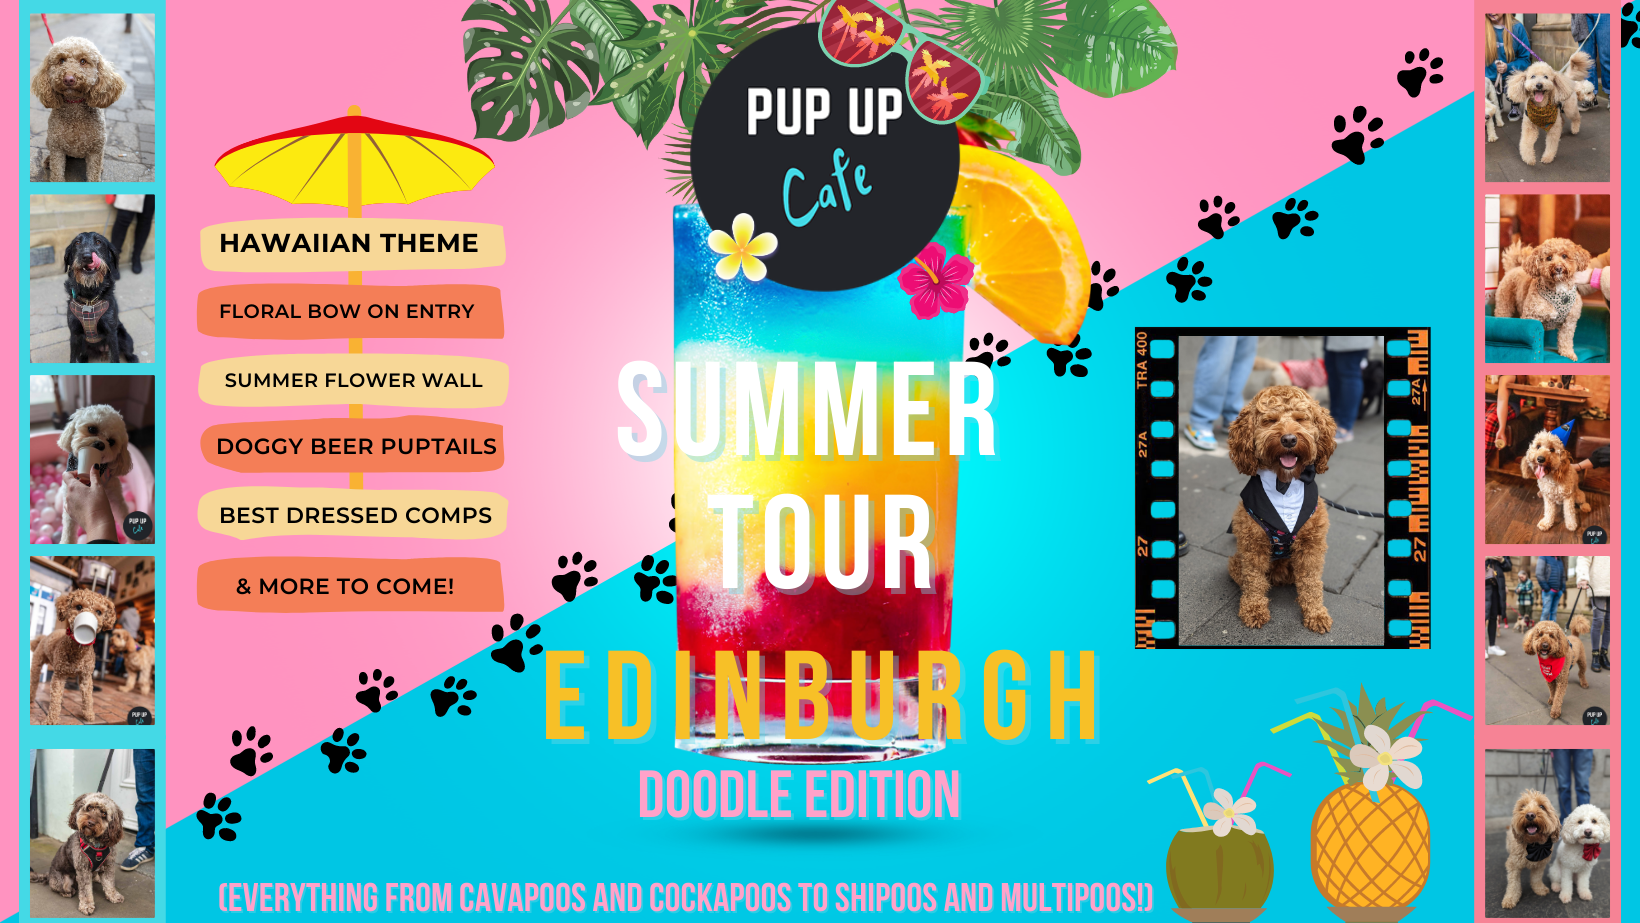 Doodle Pup Up Cafe – Edinburgh | SUMMER TOUR! 🌞